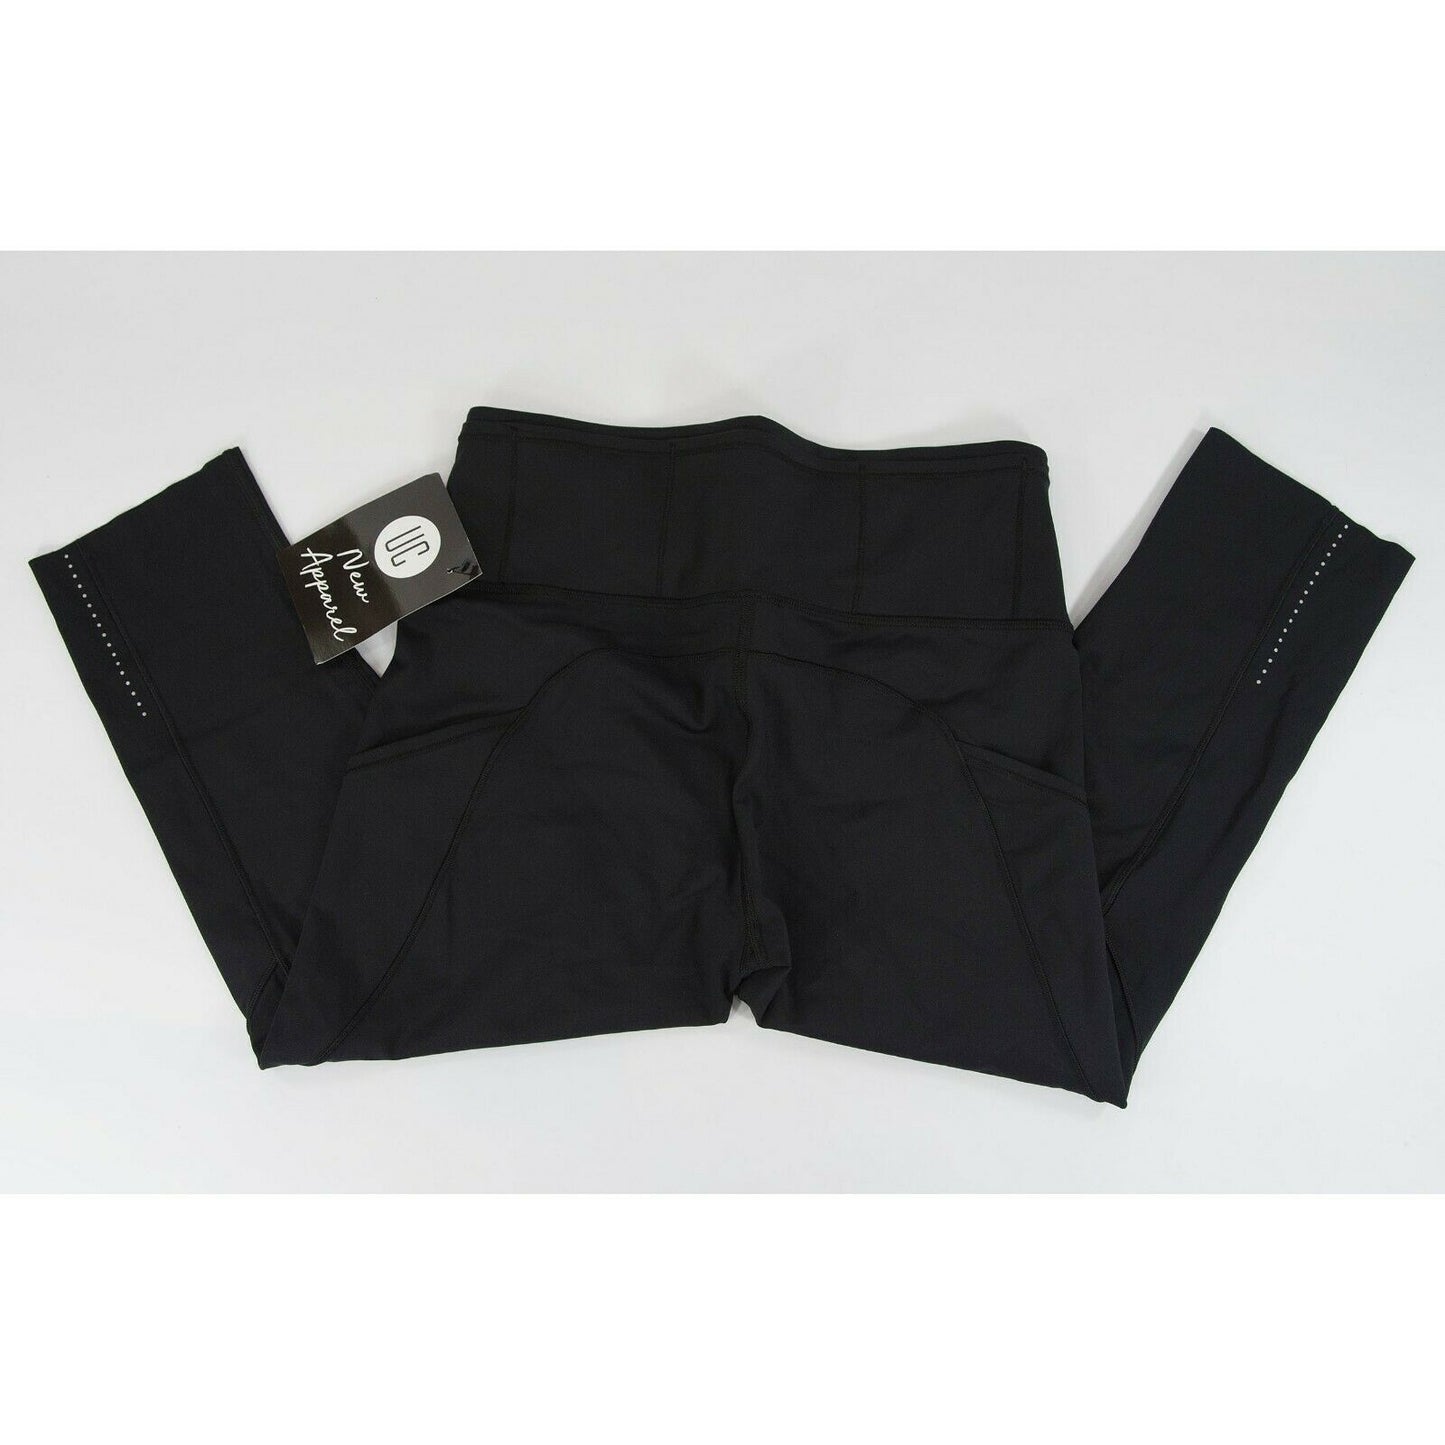 Lululemon Black Wonder Under Cropped Pocket tight leggings NWOT Size 8 C7